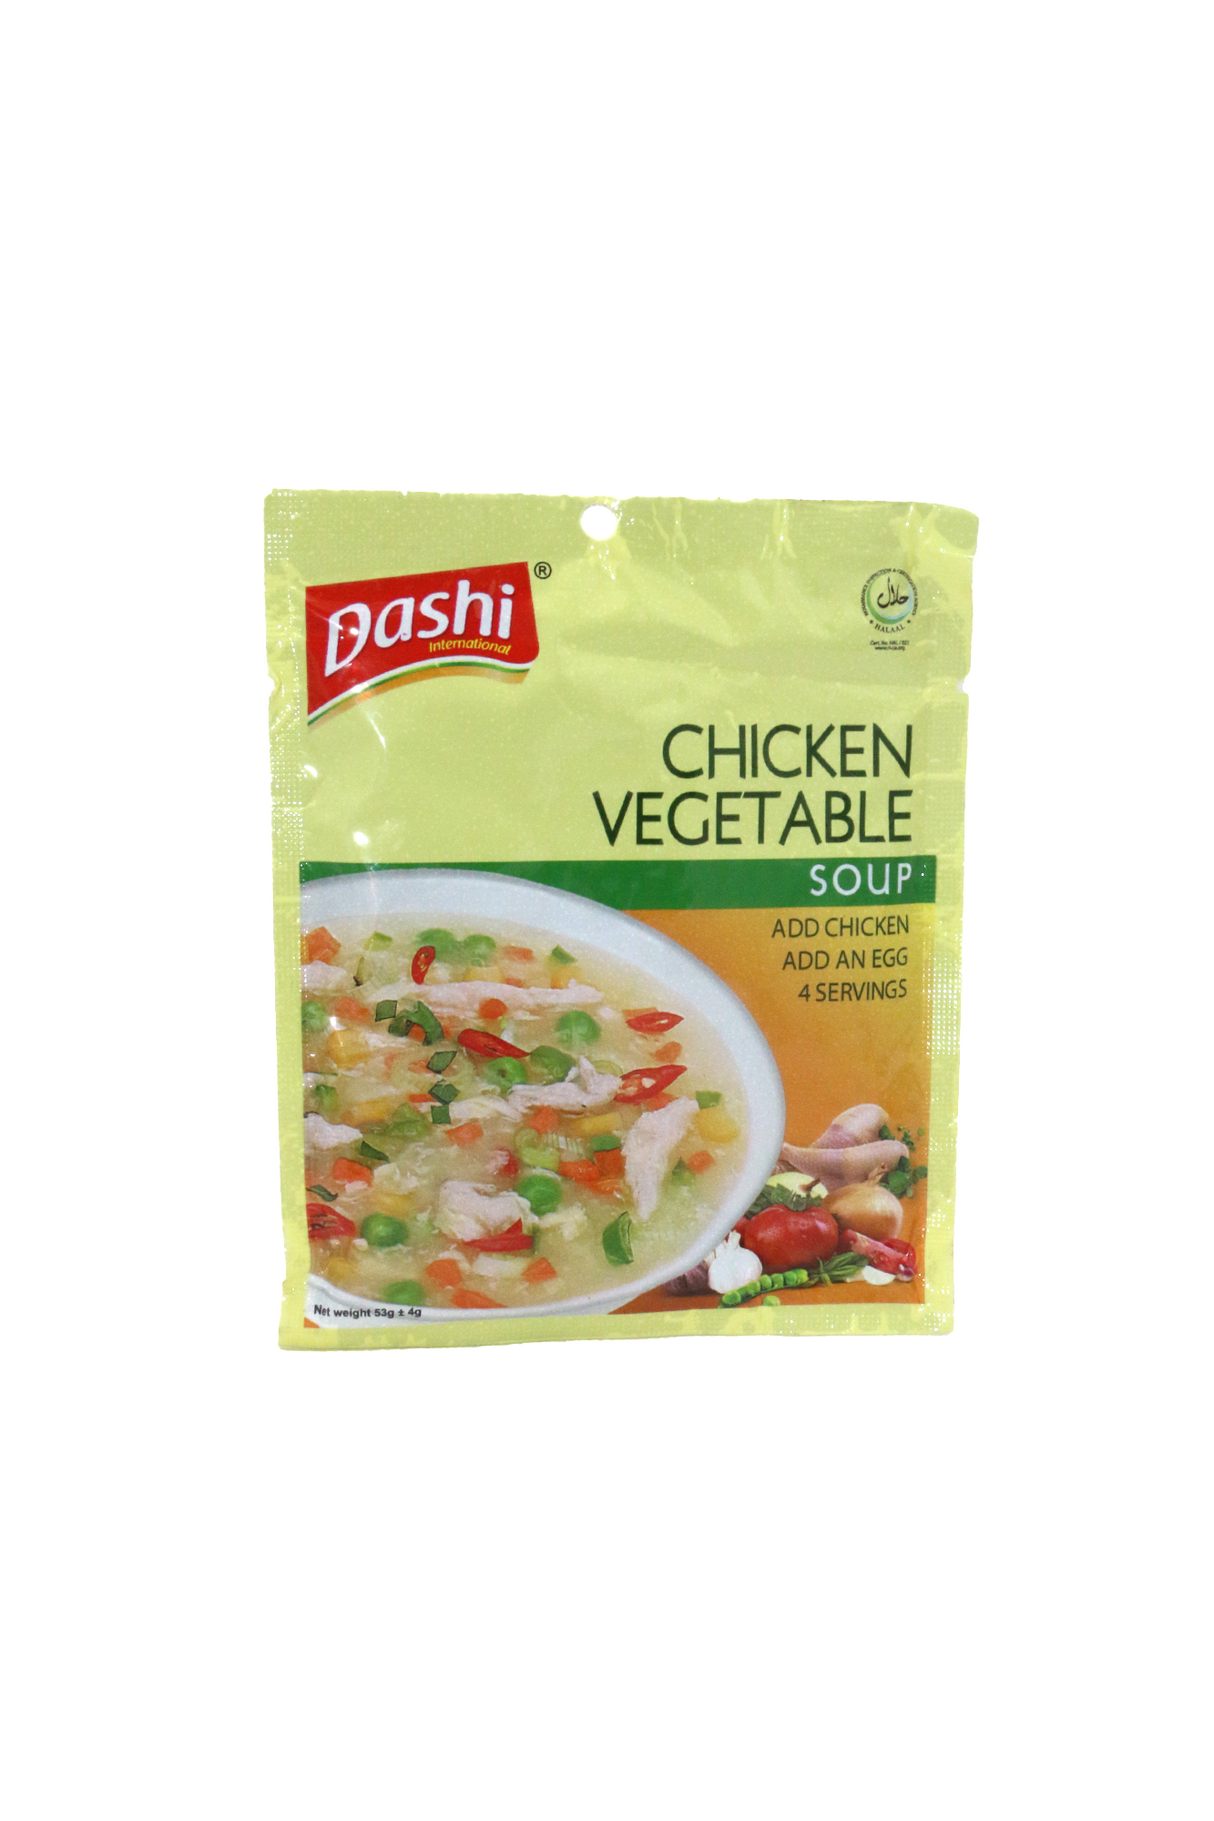 dashi soup chicken vegetable 53g